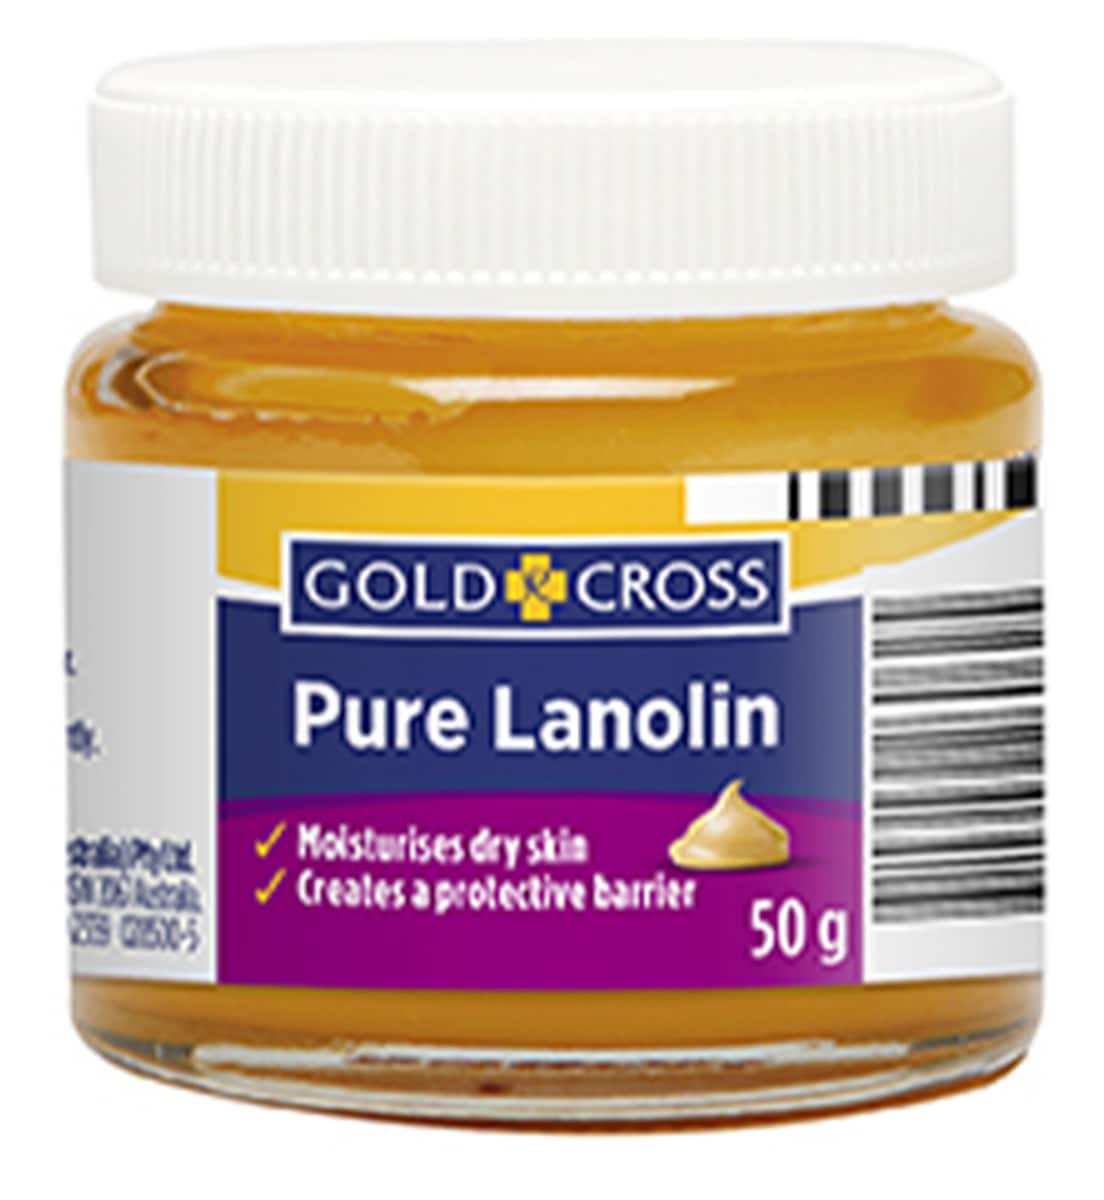 Gold Cross Pure Lanolin